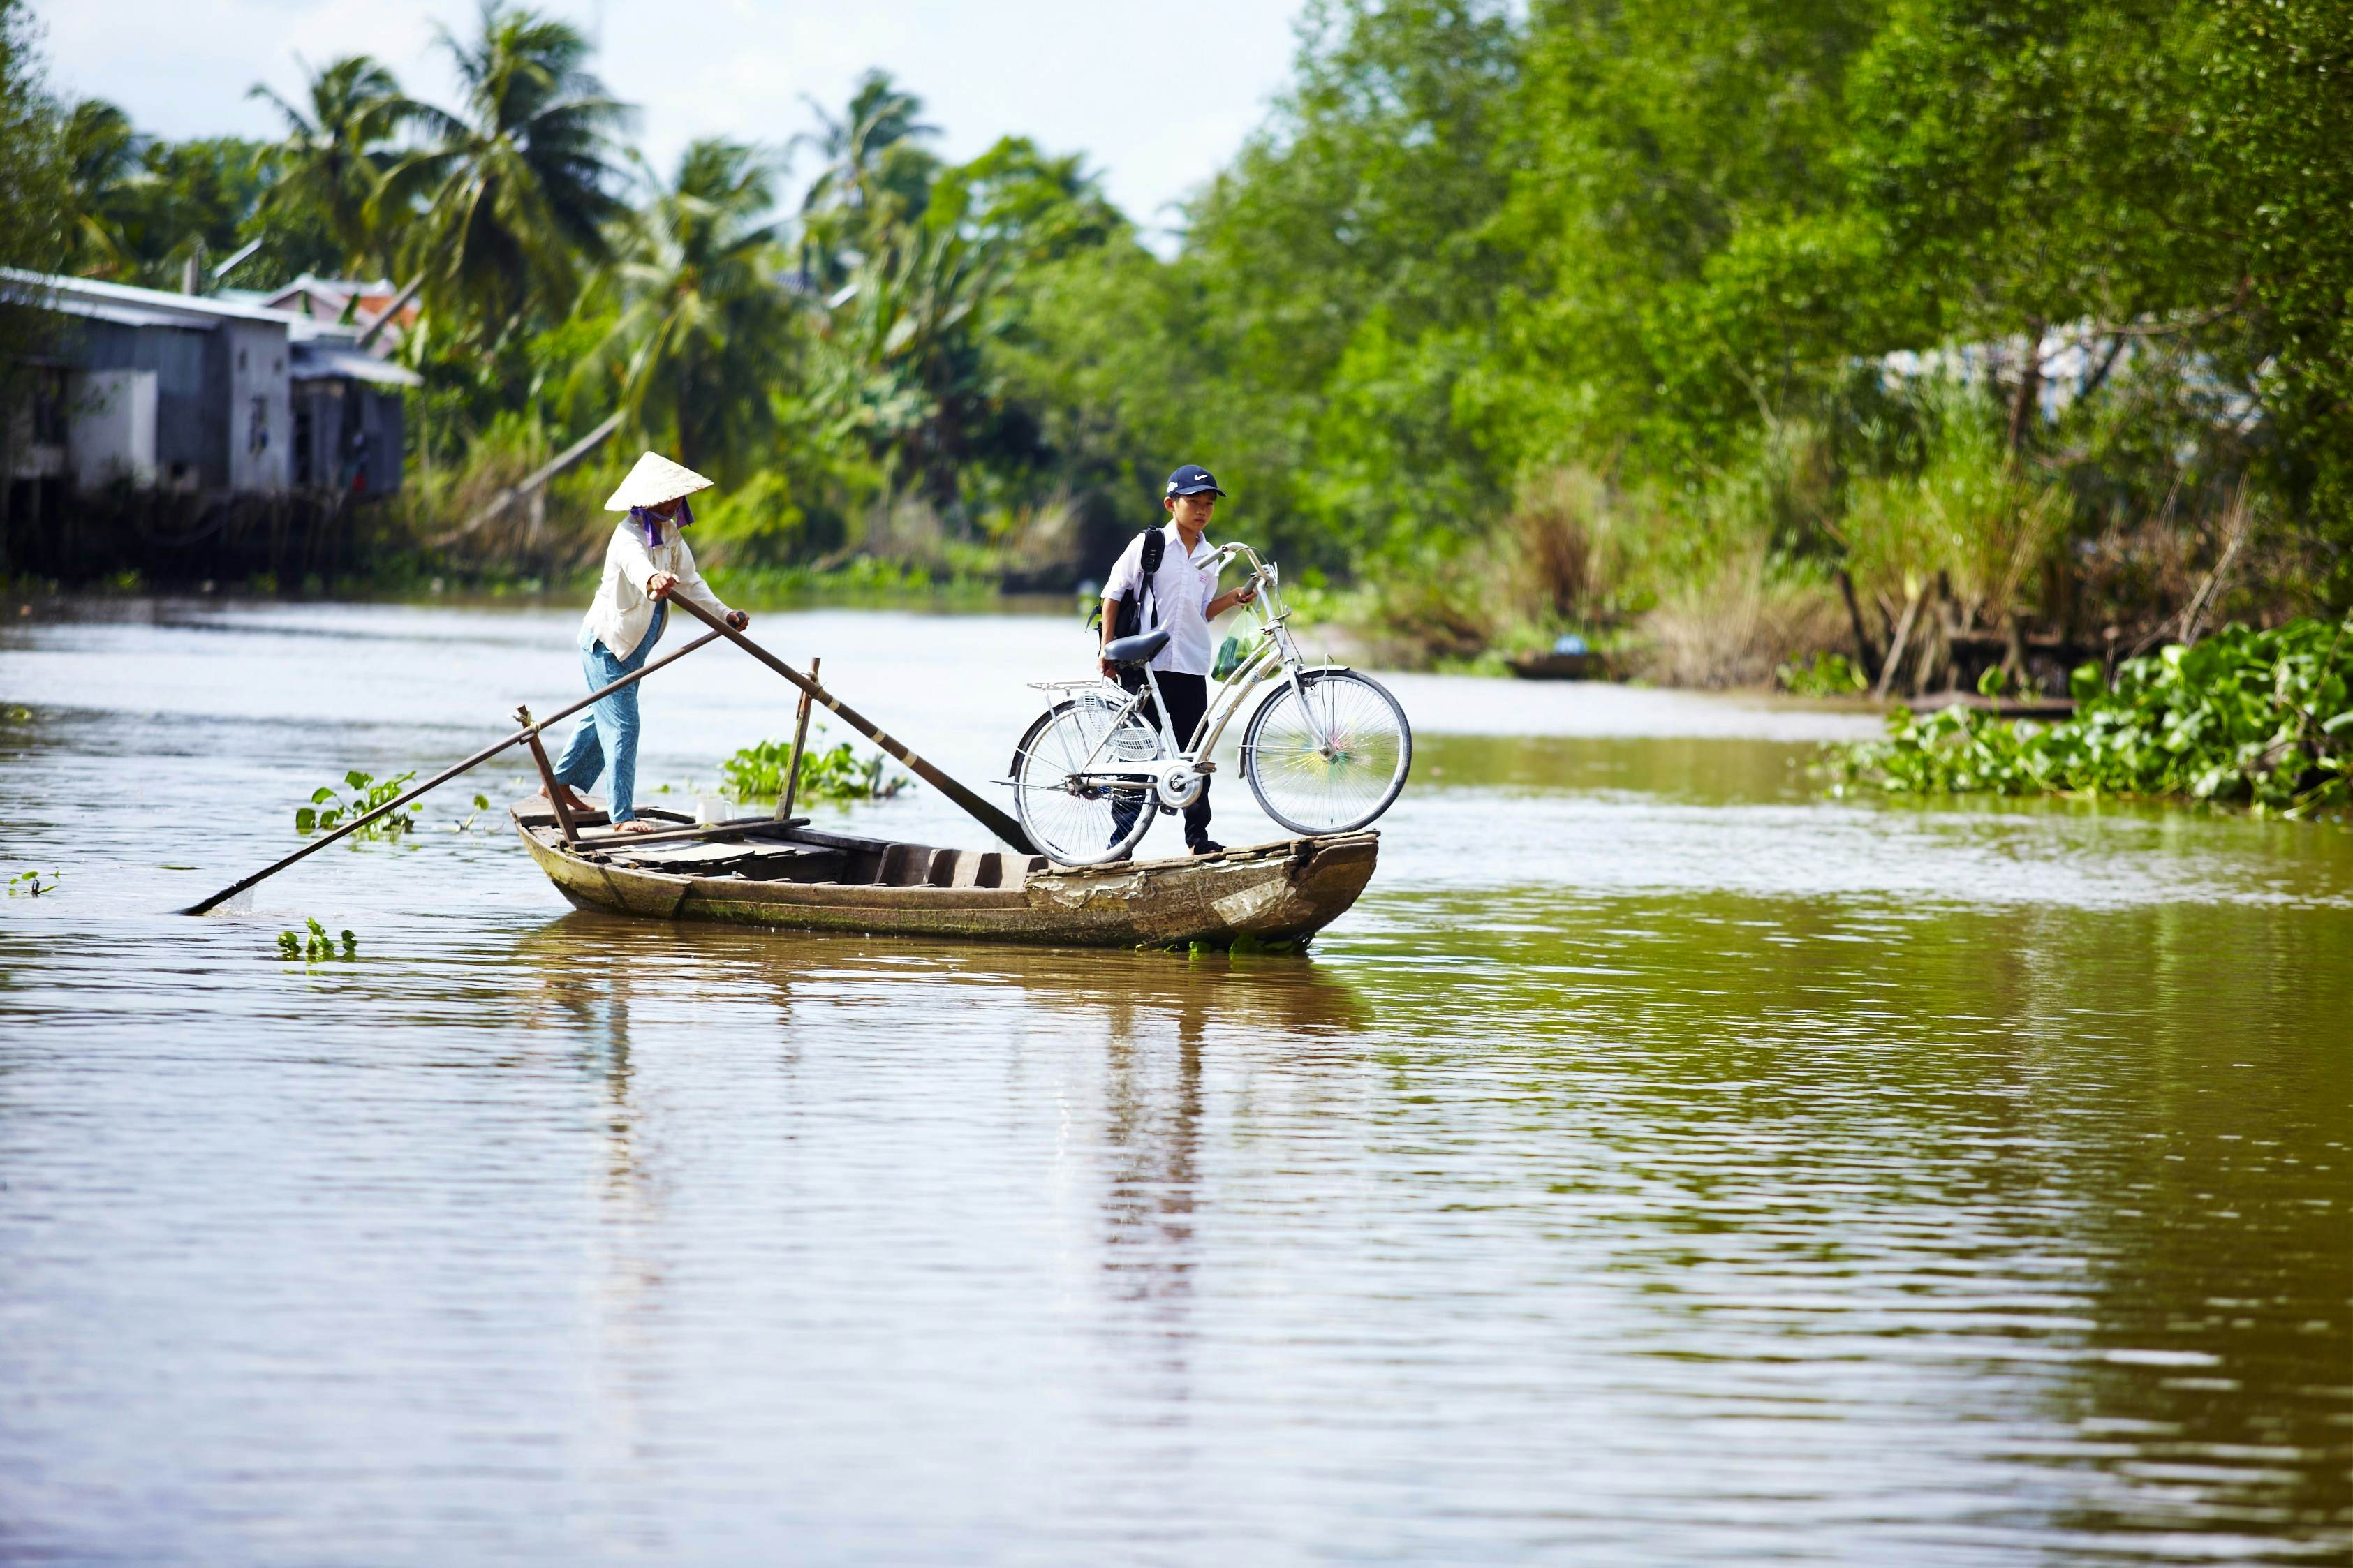 Lonely Planet: Vietnam - TuttoVietnam